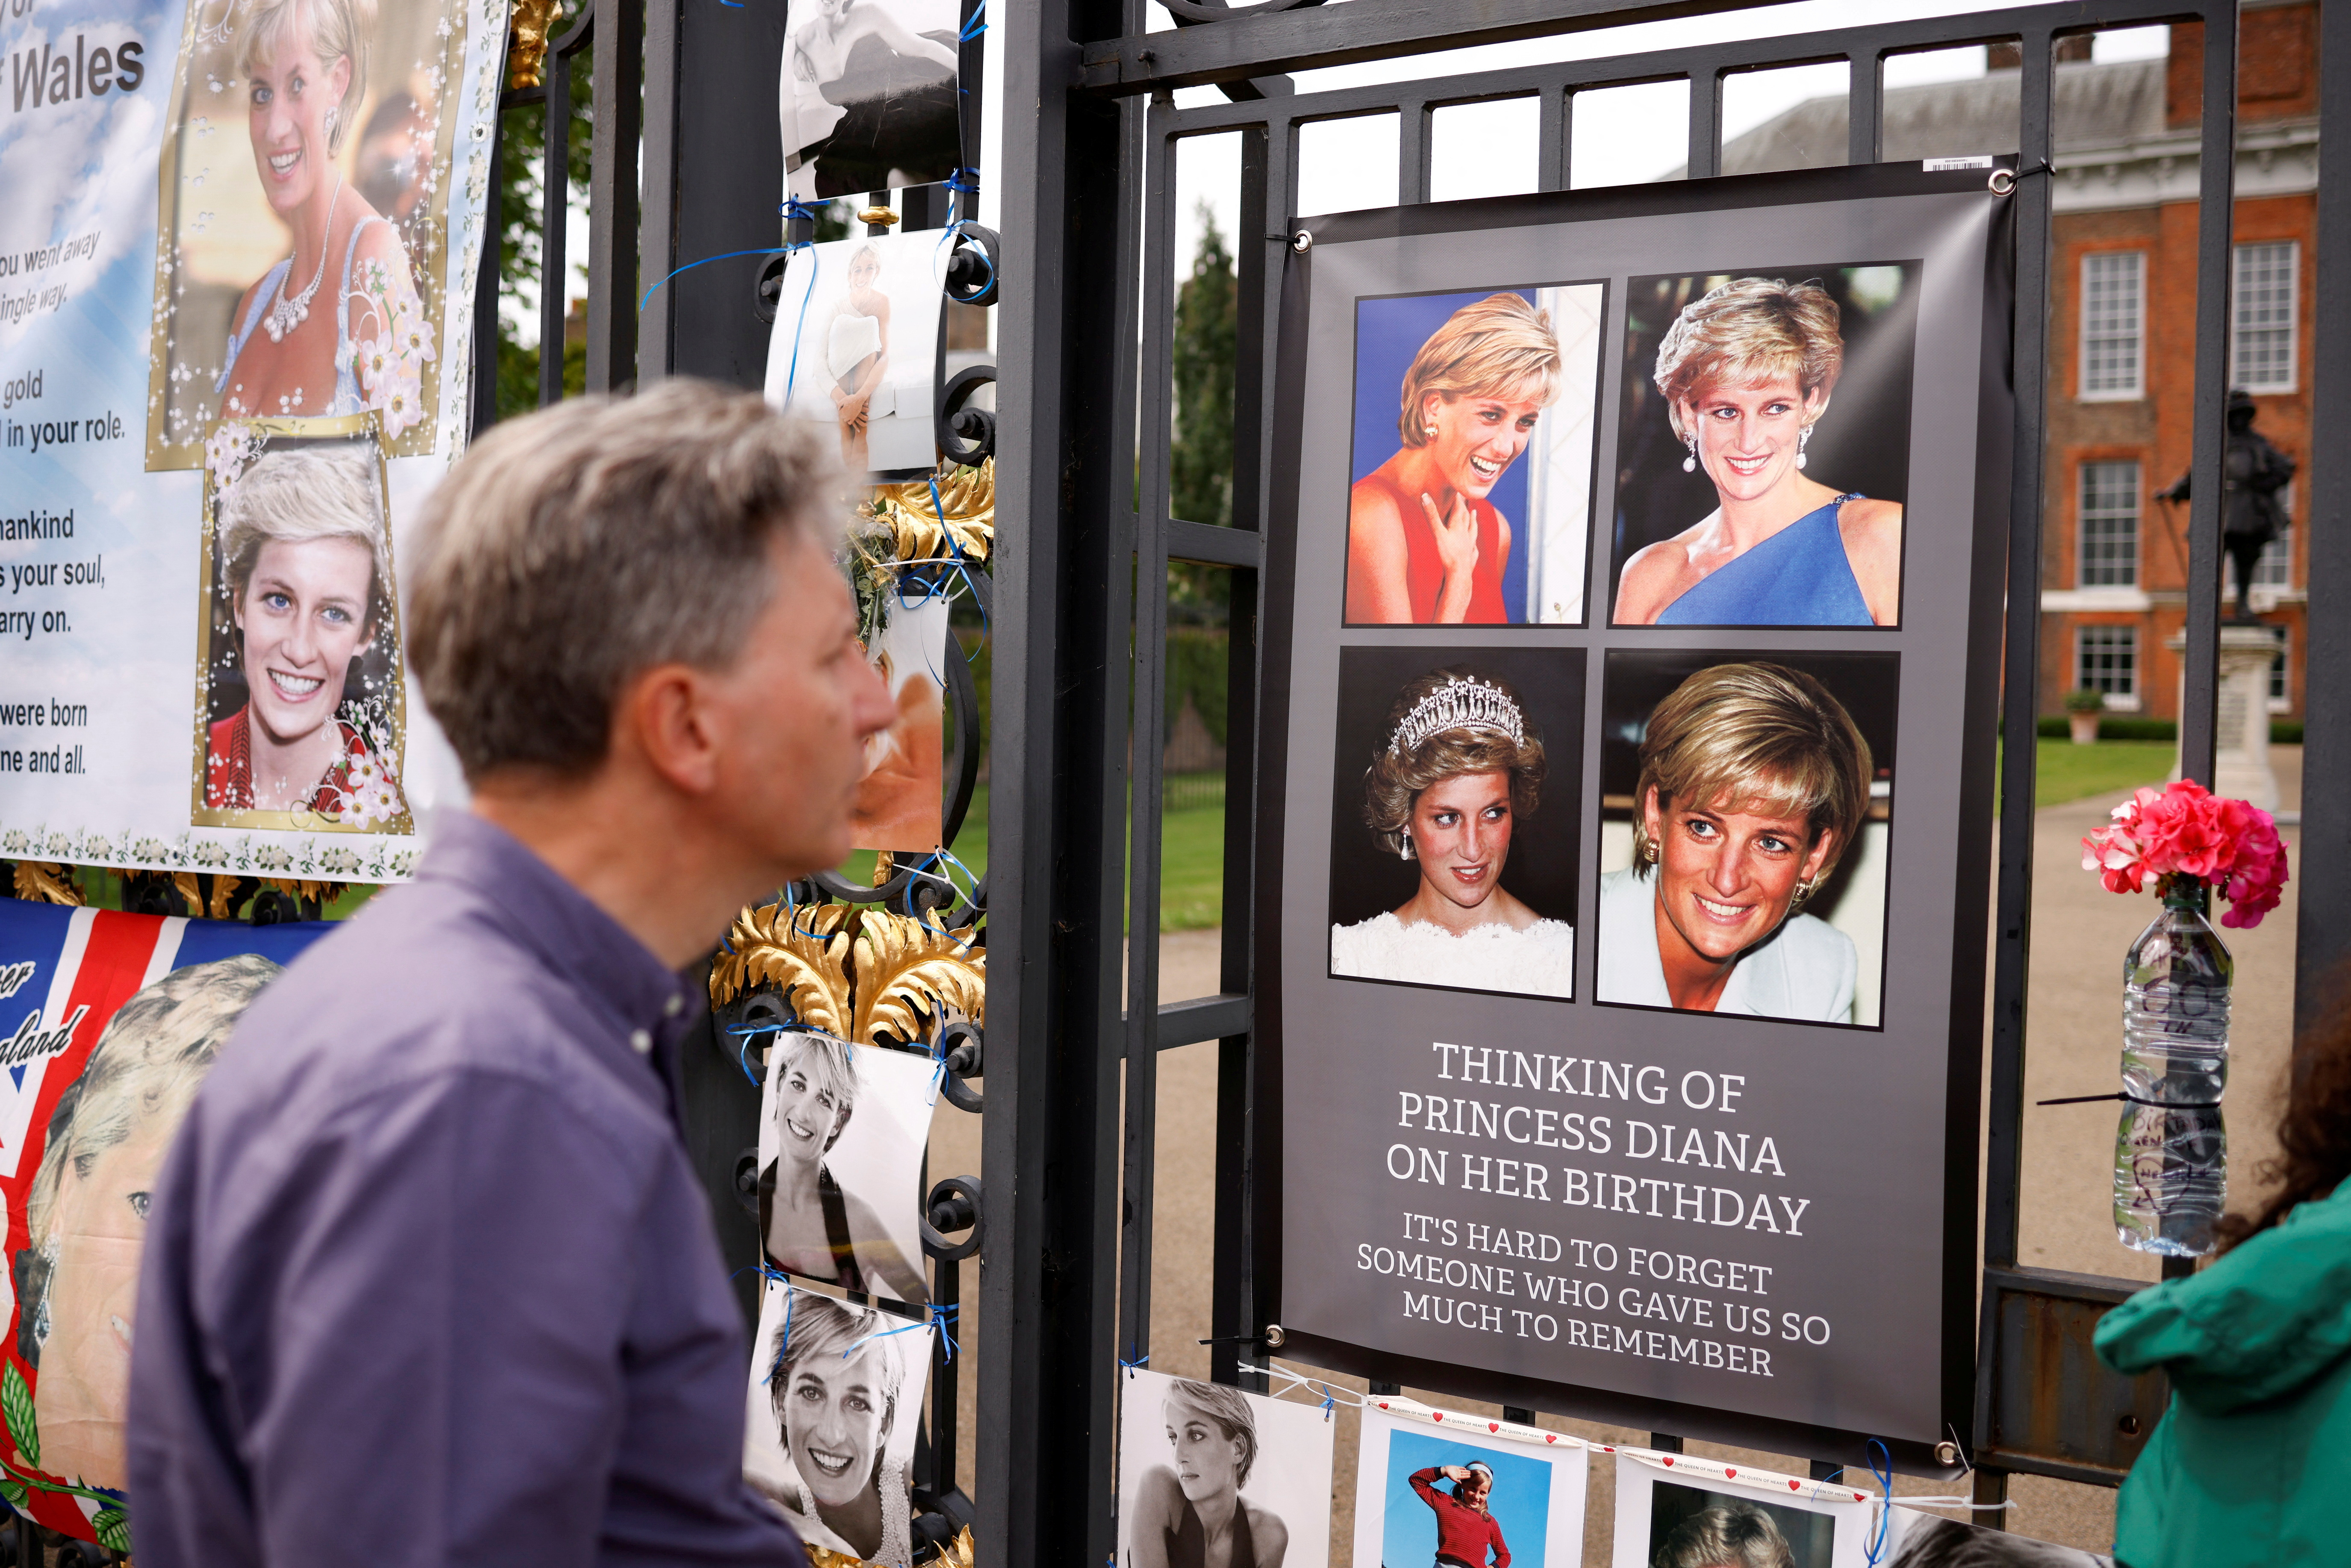 Princess Diana statue installed at Kensington Palace